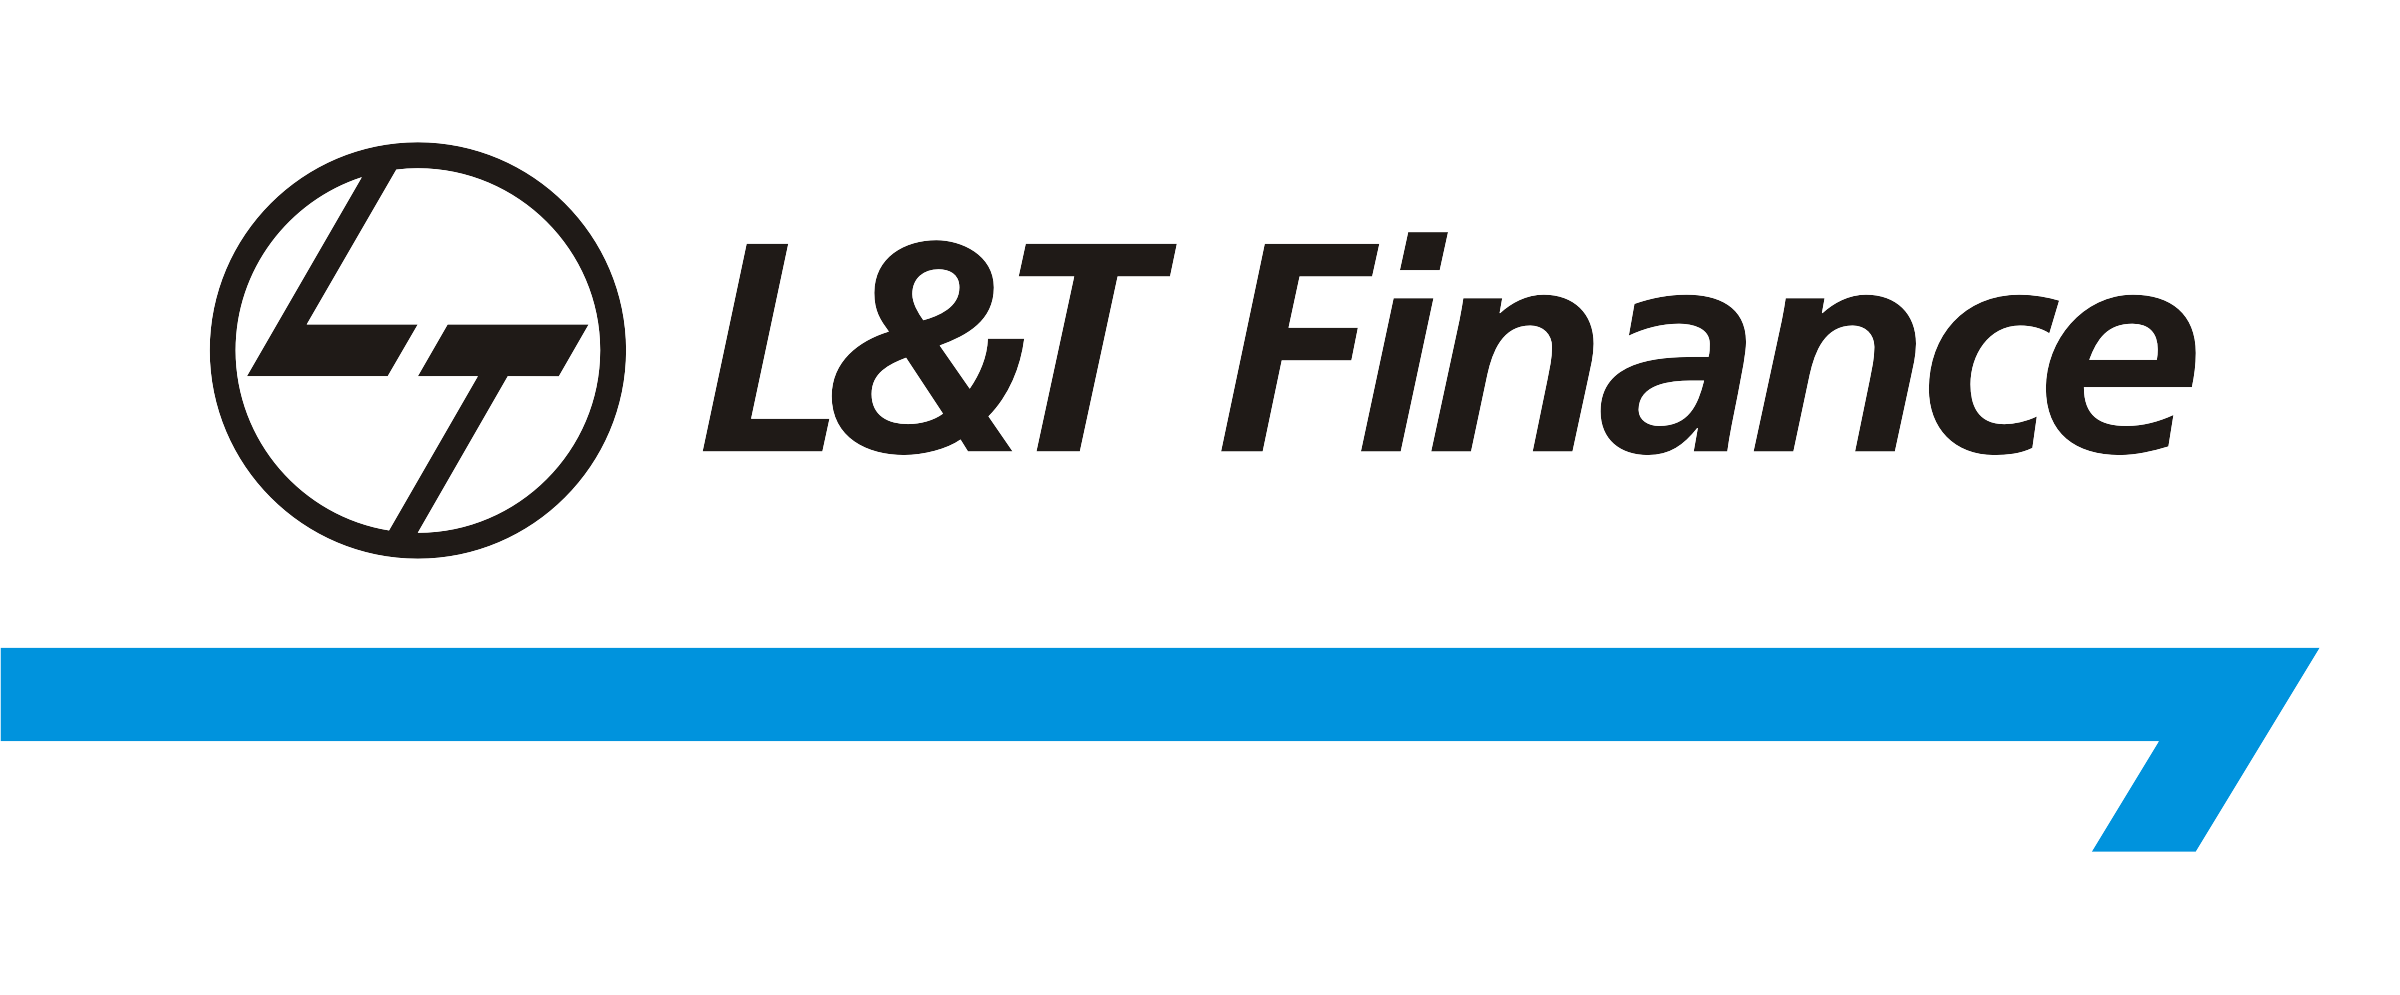 L&t Finance Limited